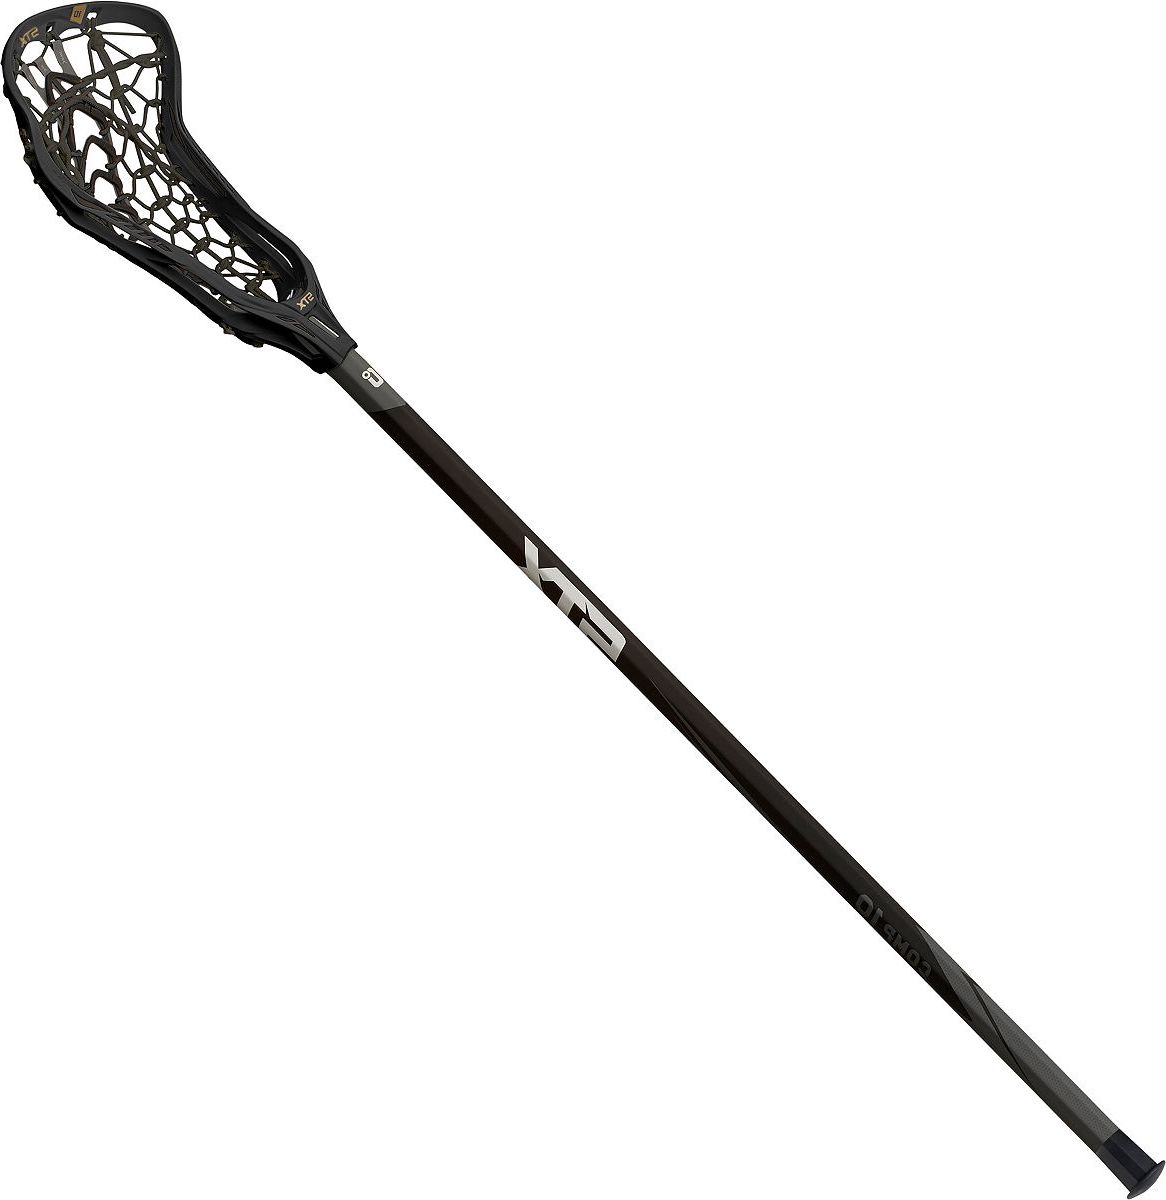 STX Women's Crux 600 on Composite 10 Complete Lacrosse Stick